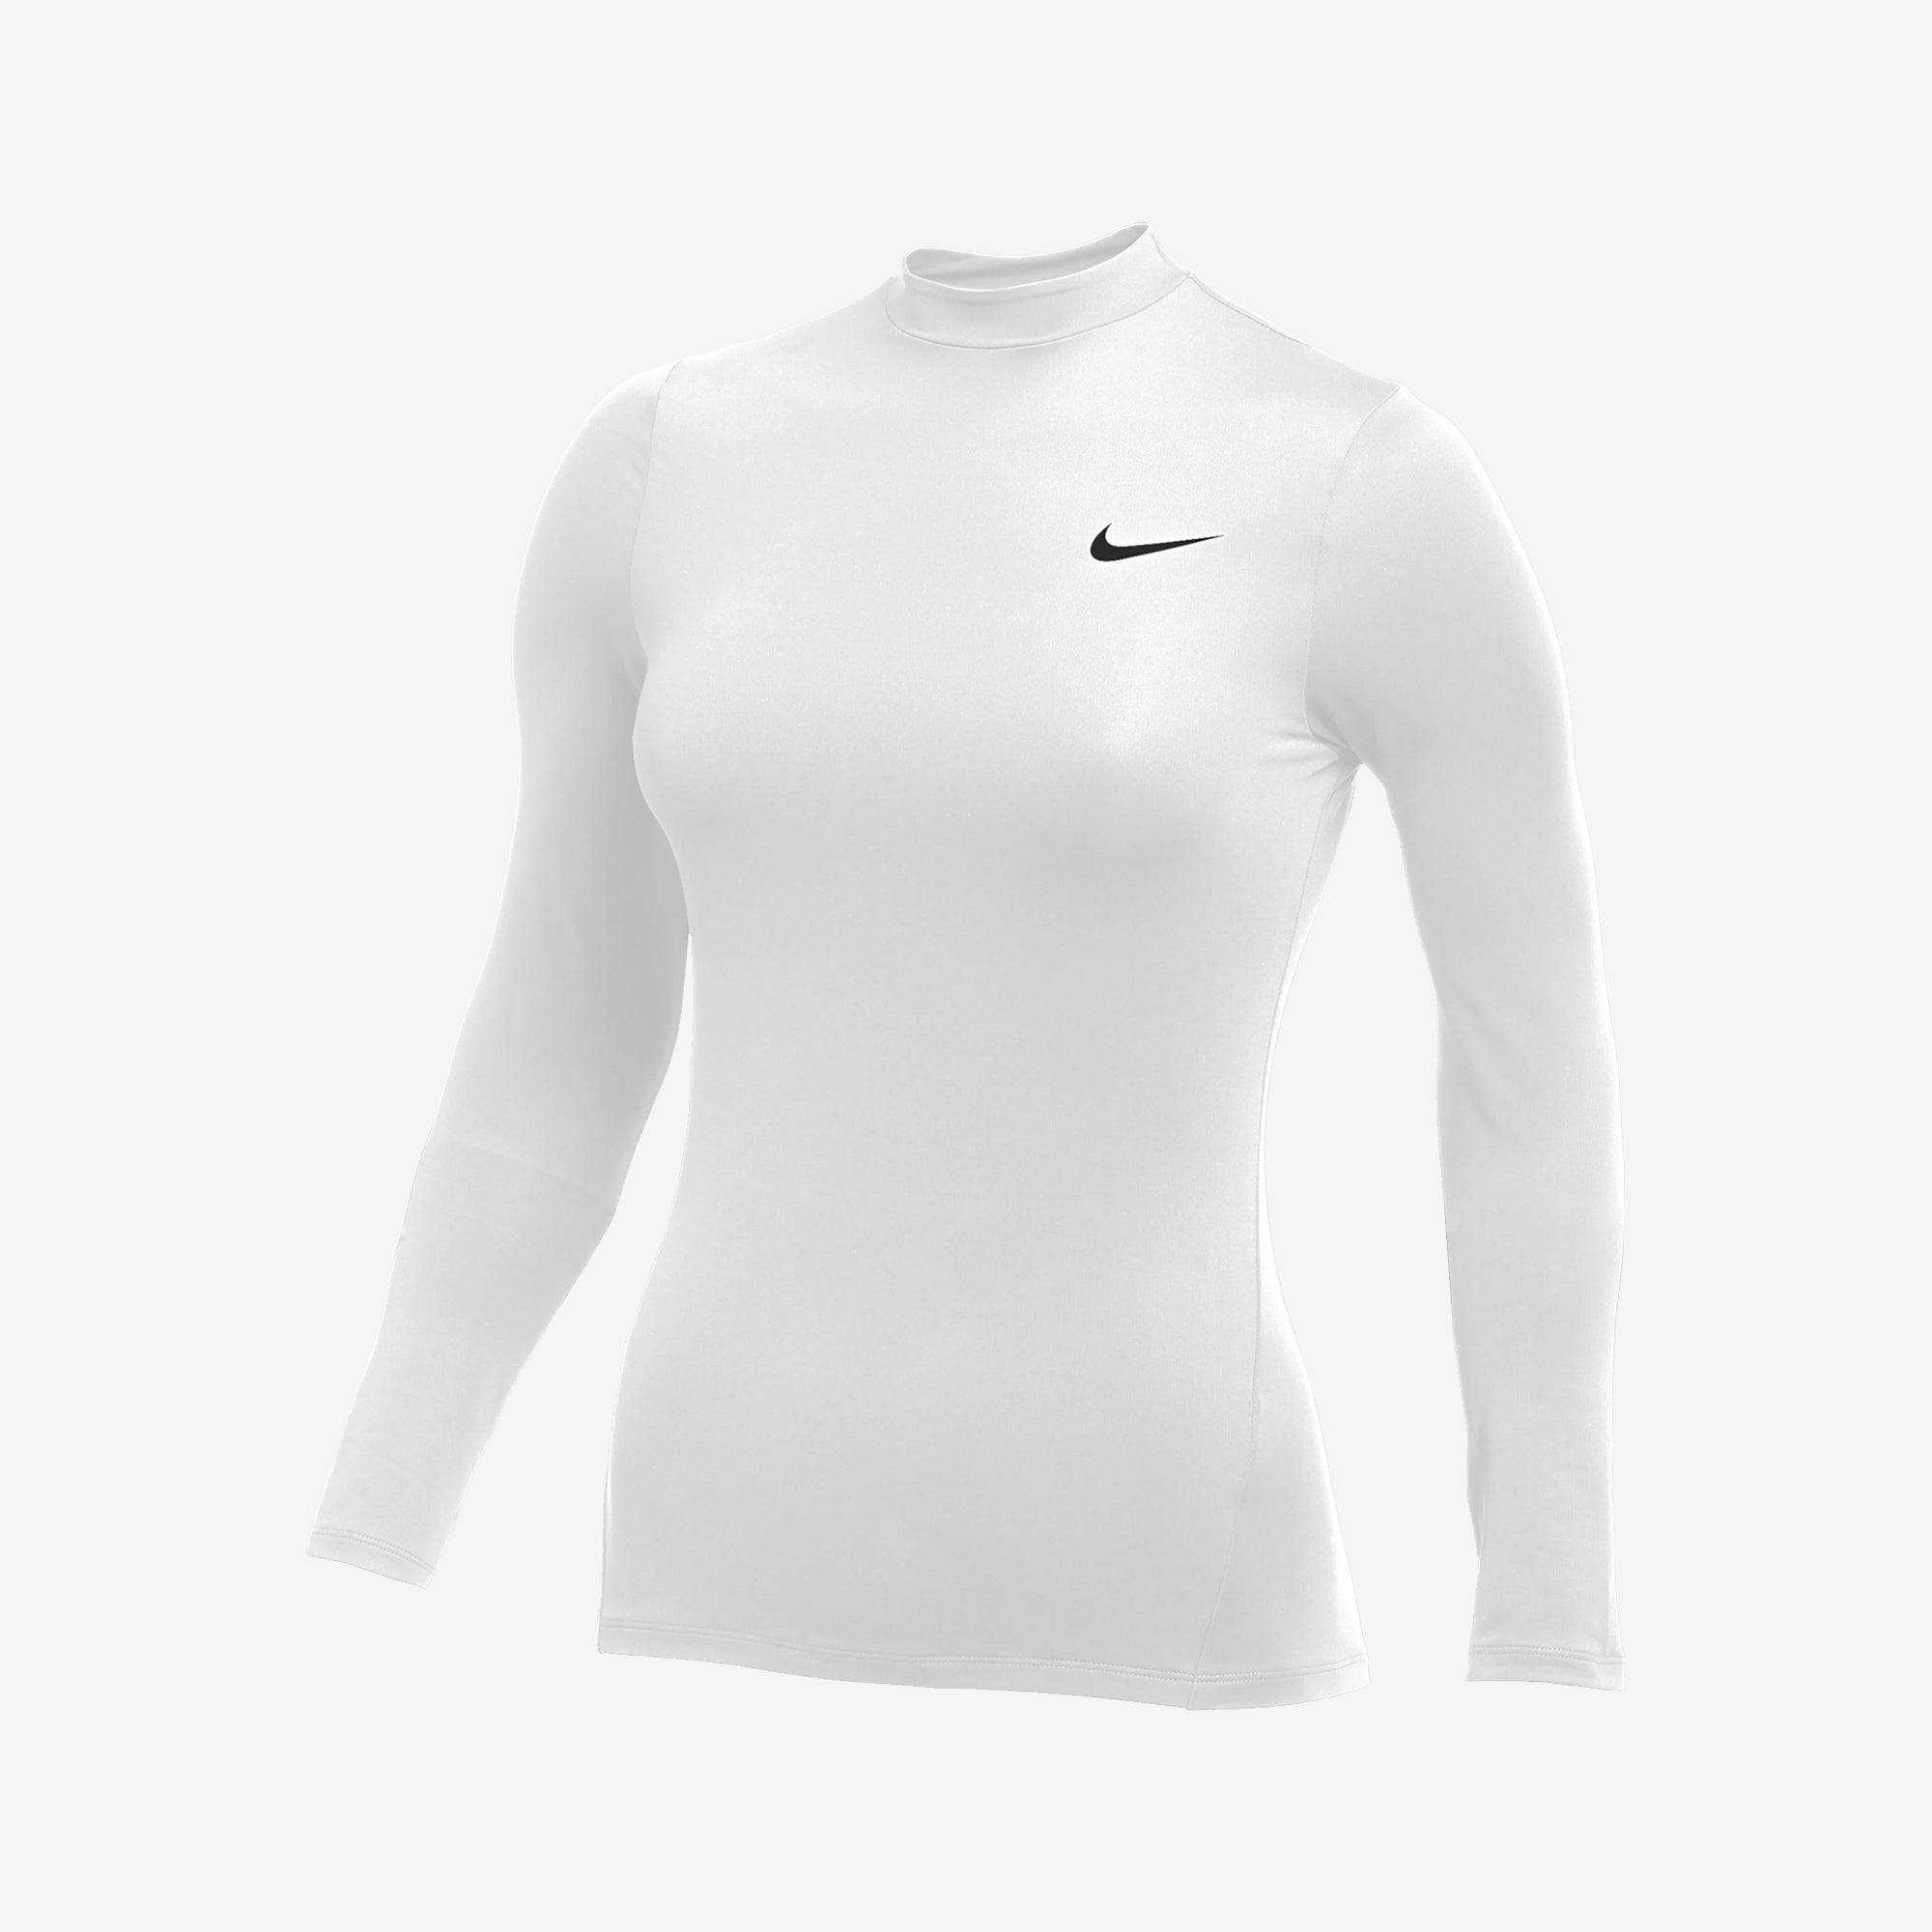 Nike Pro Women's Sleeve Top White